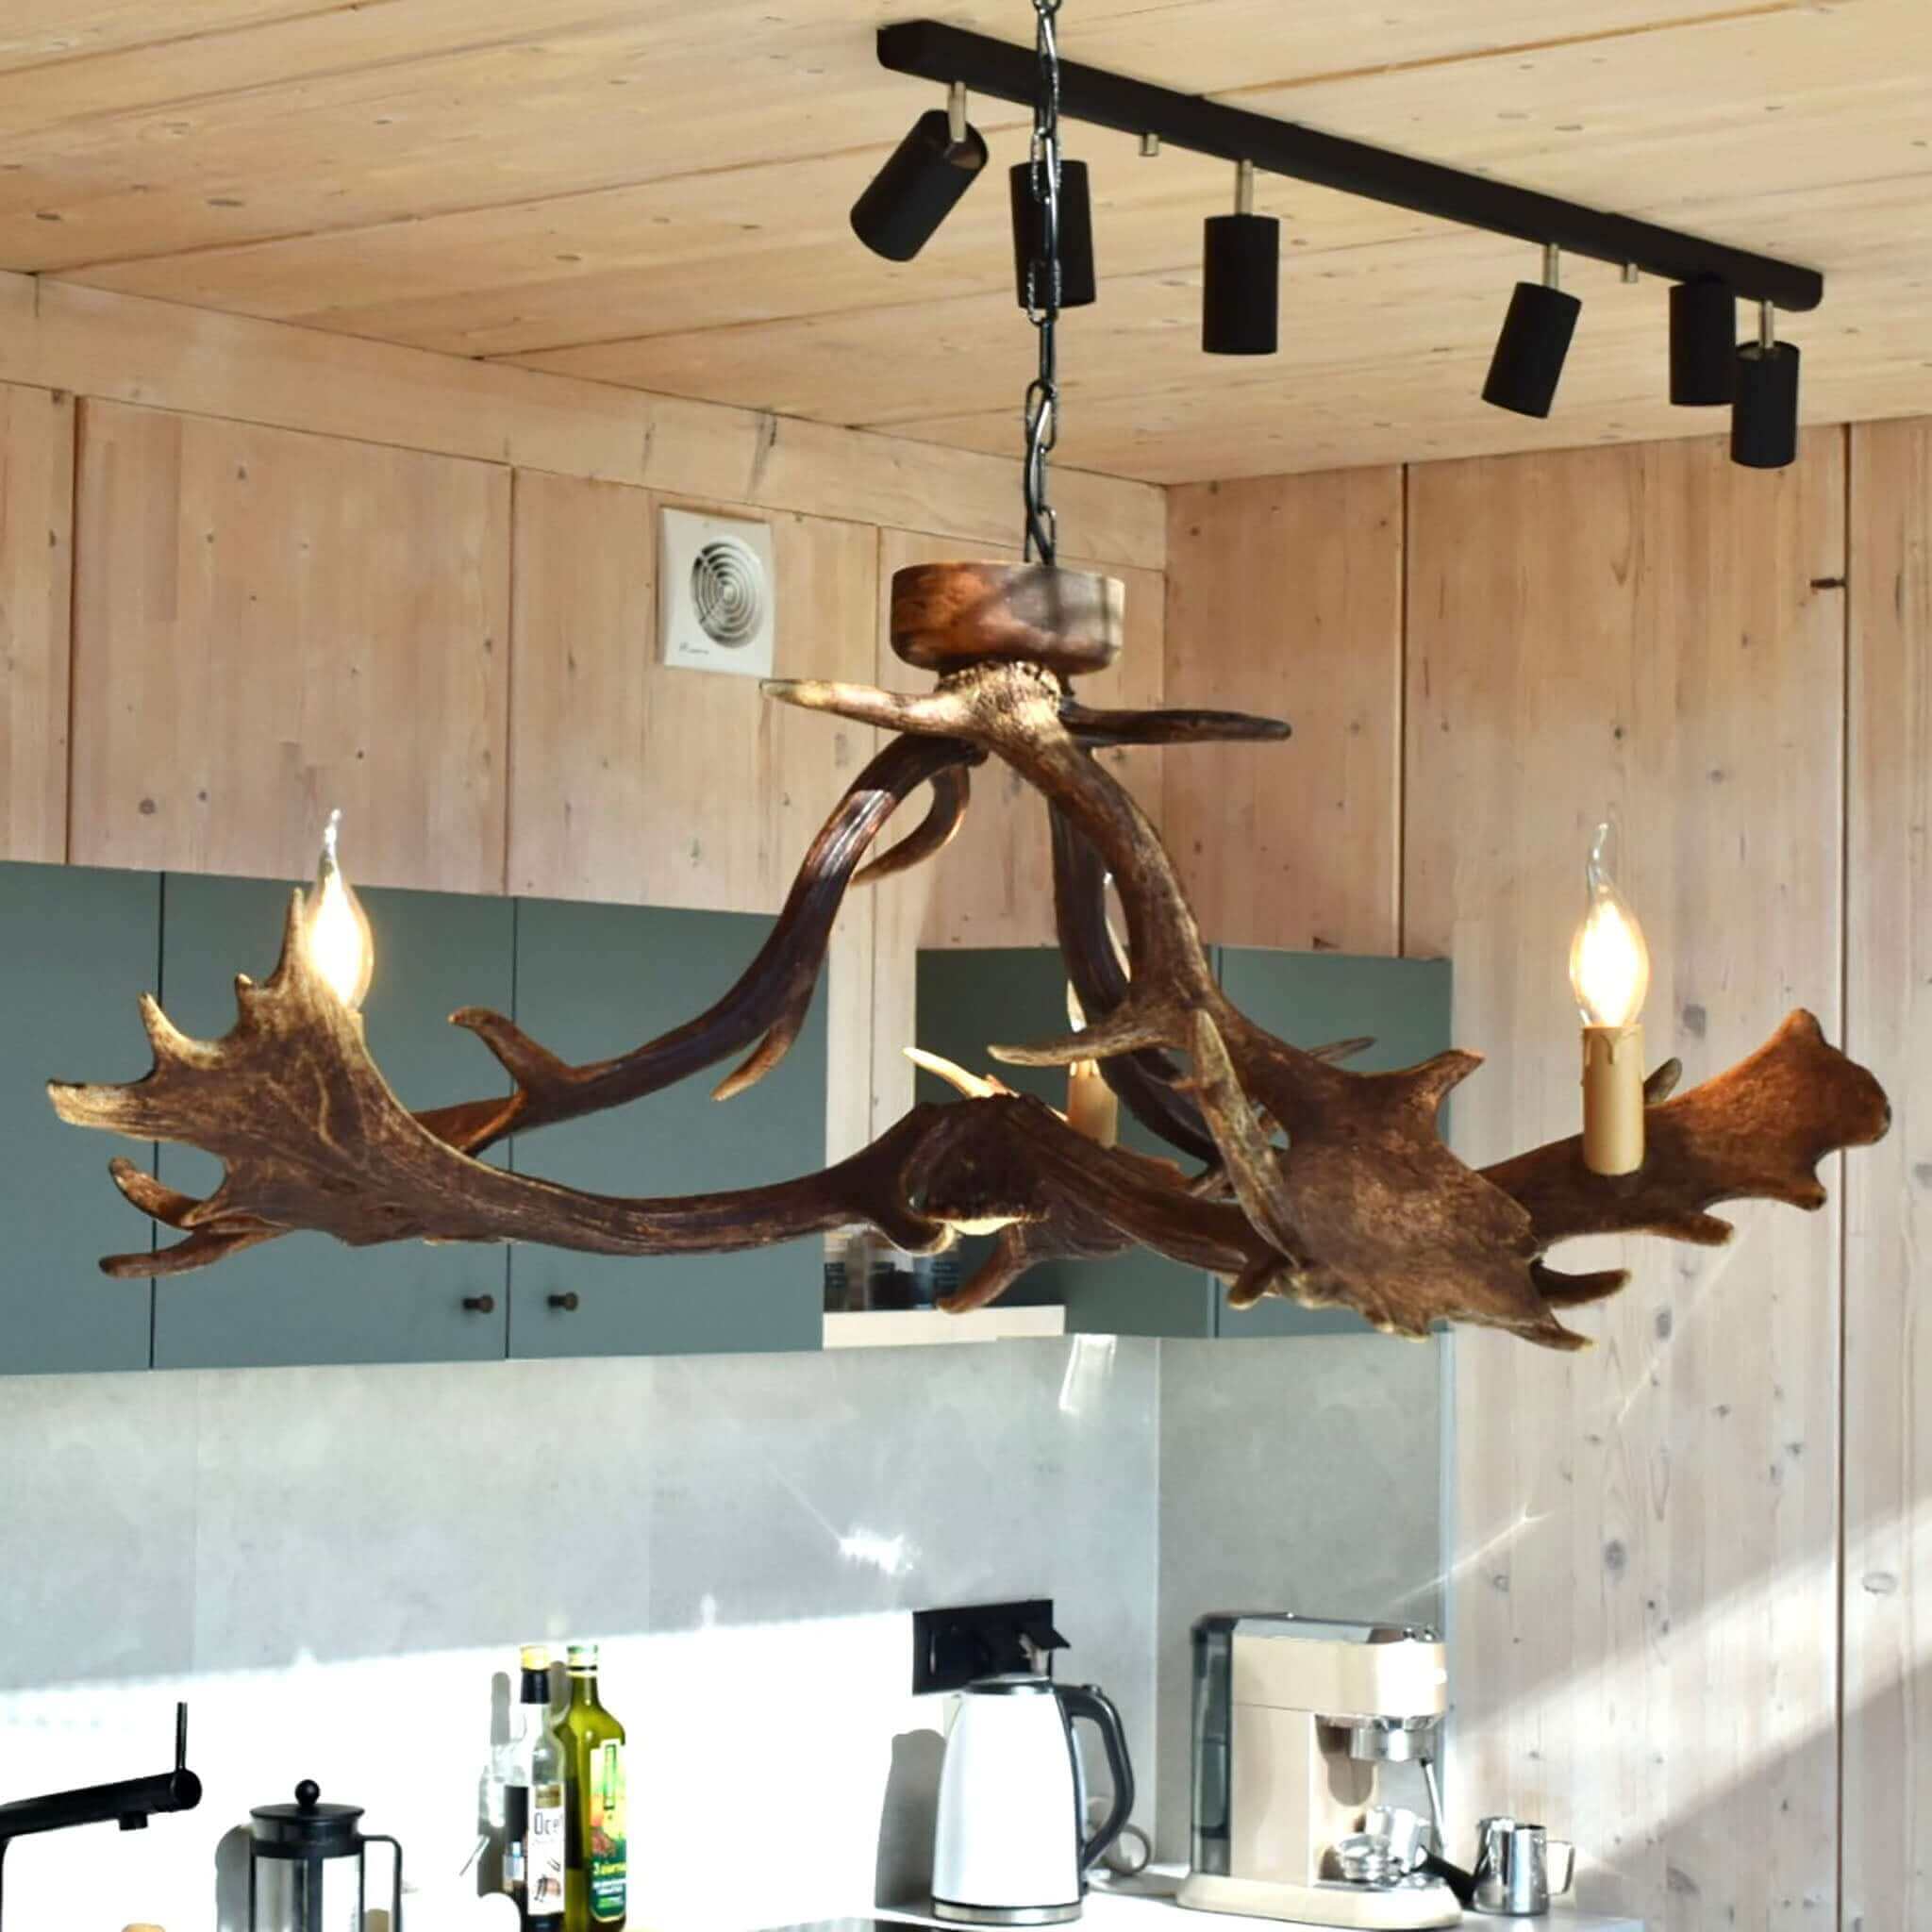 Real antler chandelier in dinning room.